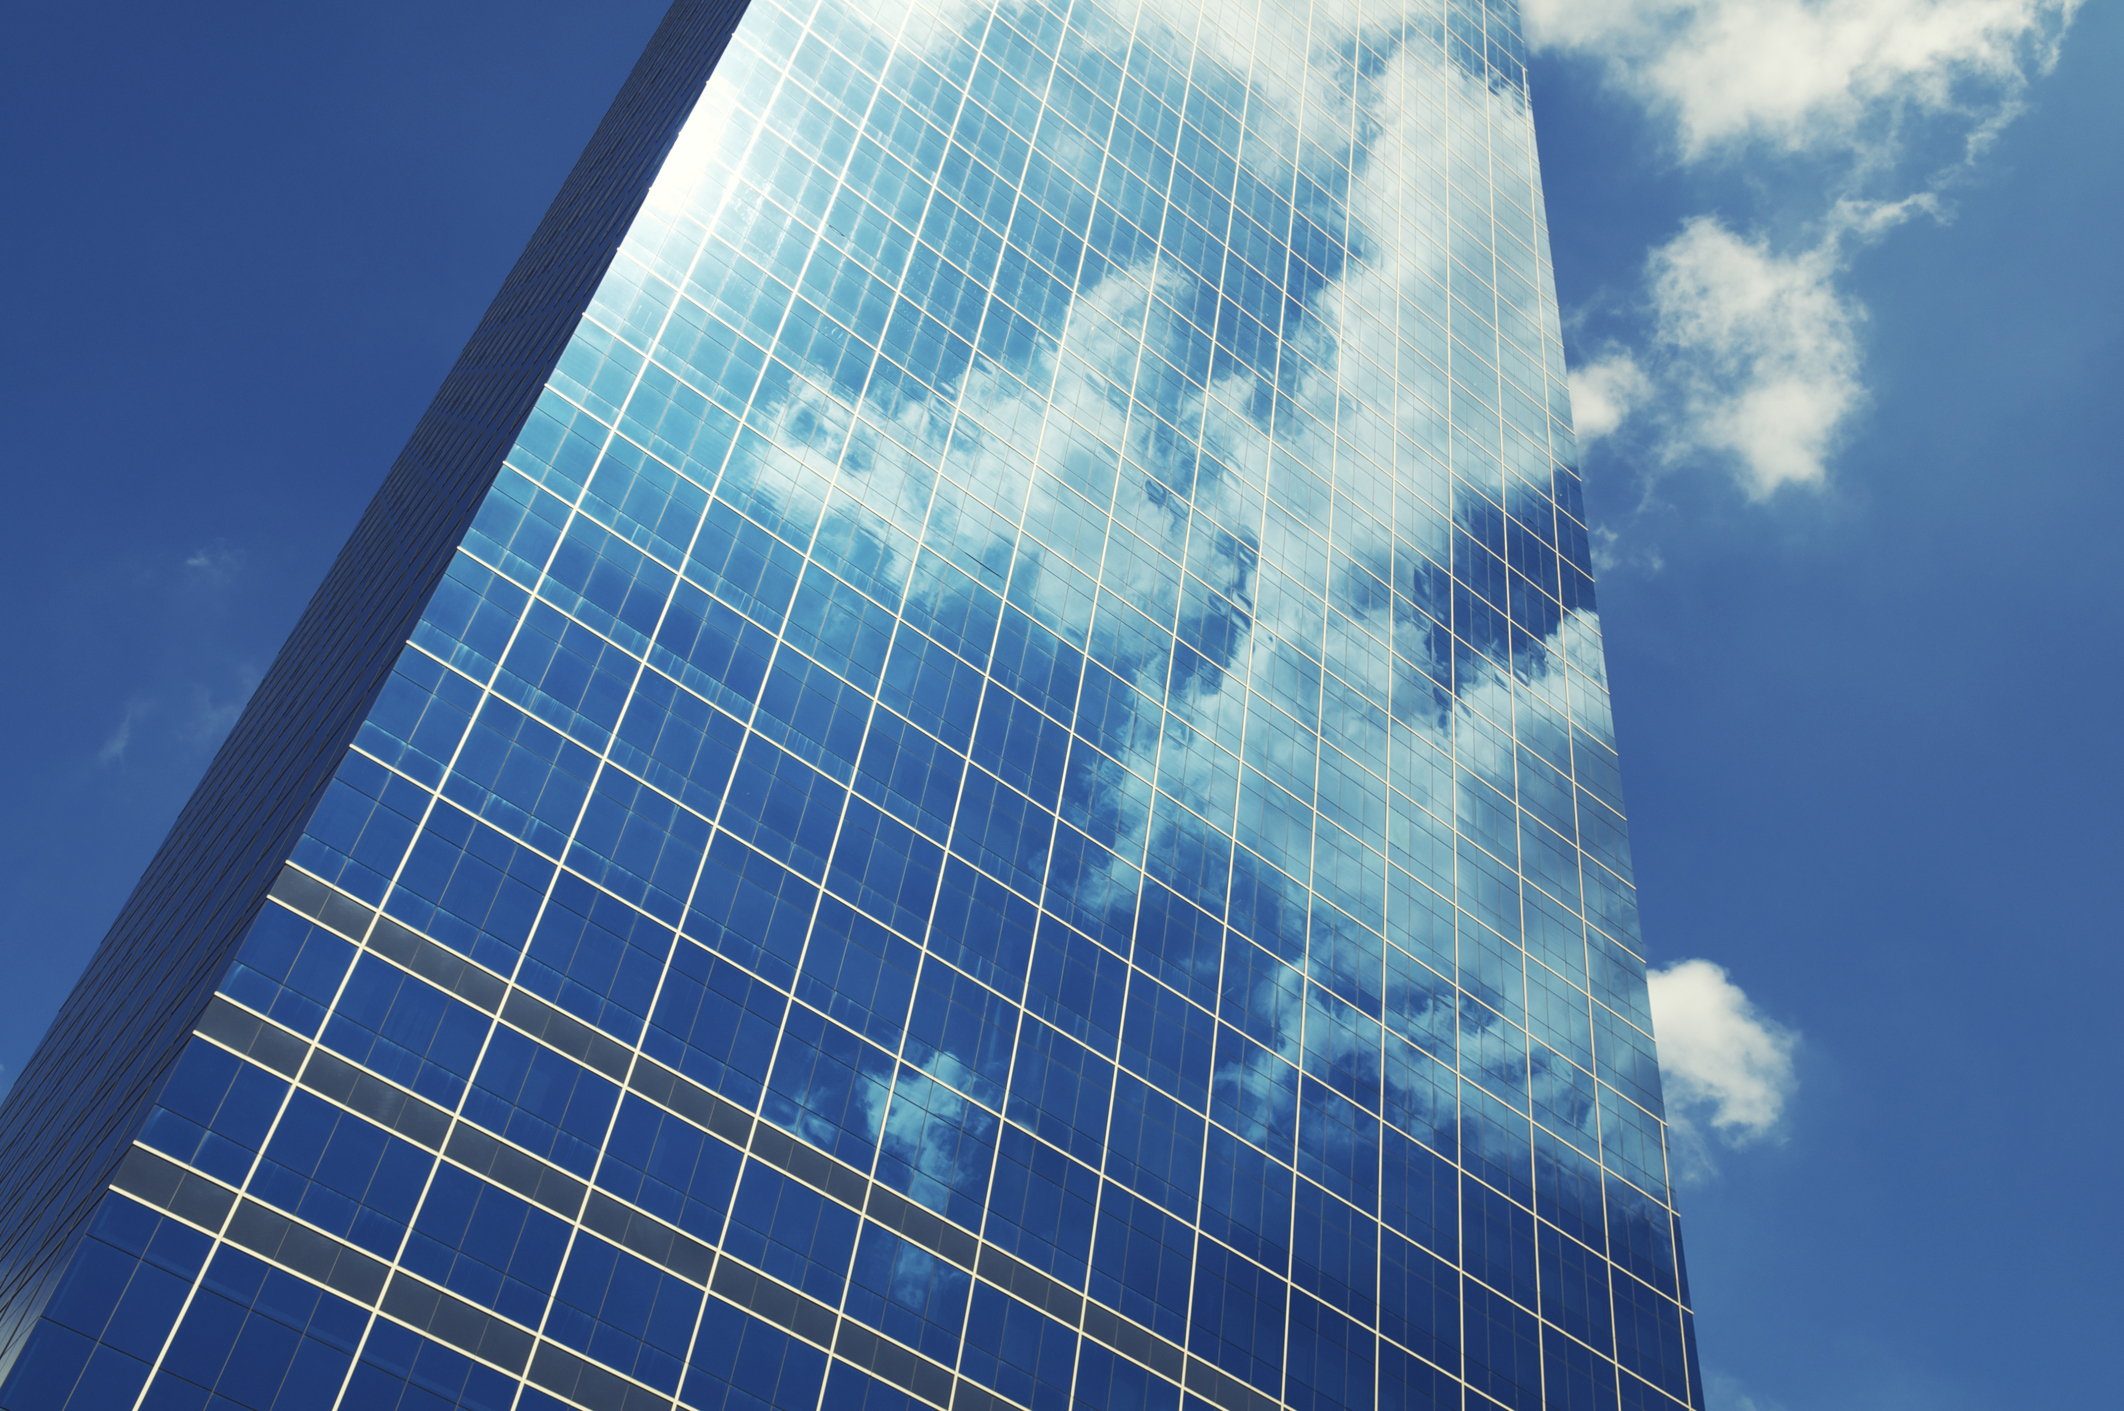 Sleek Glass Office Skyscraper Blue Sky Business Reflection